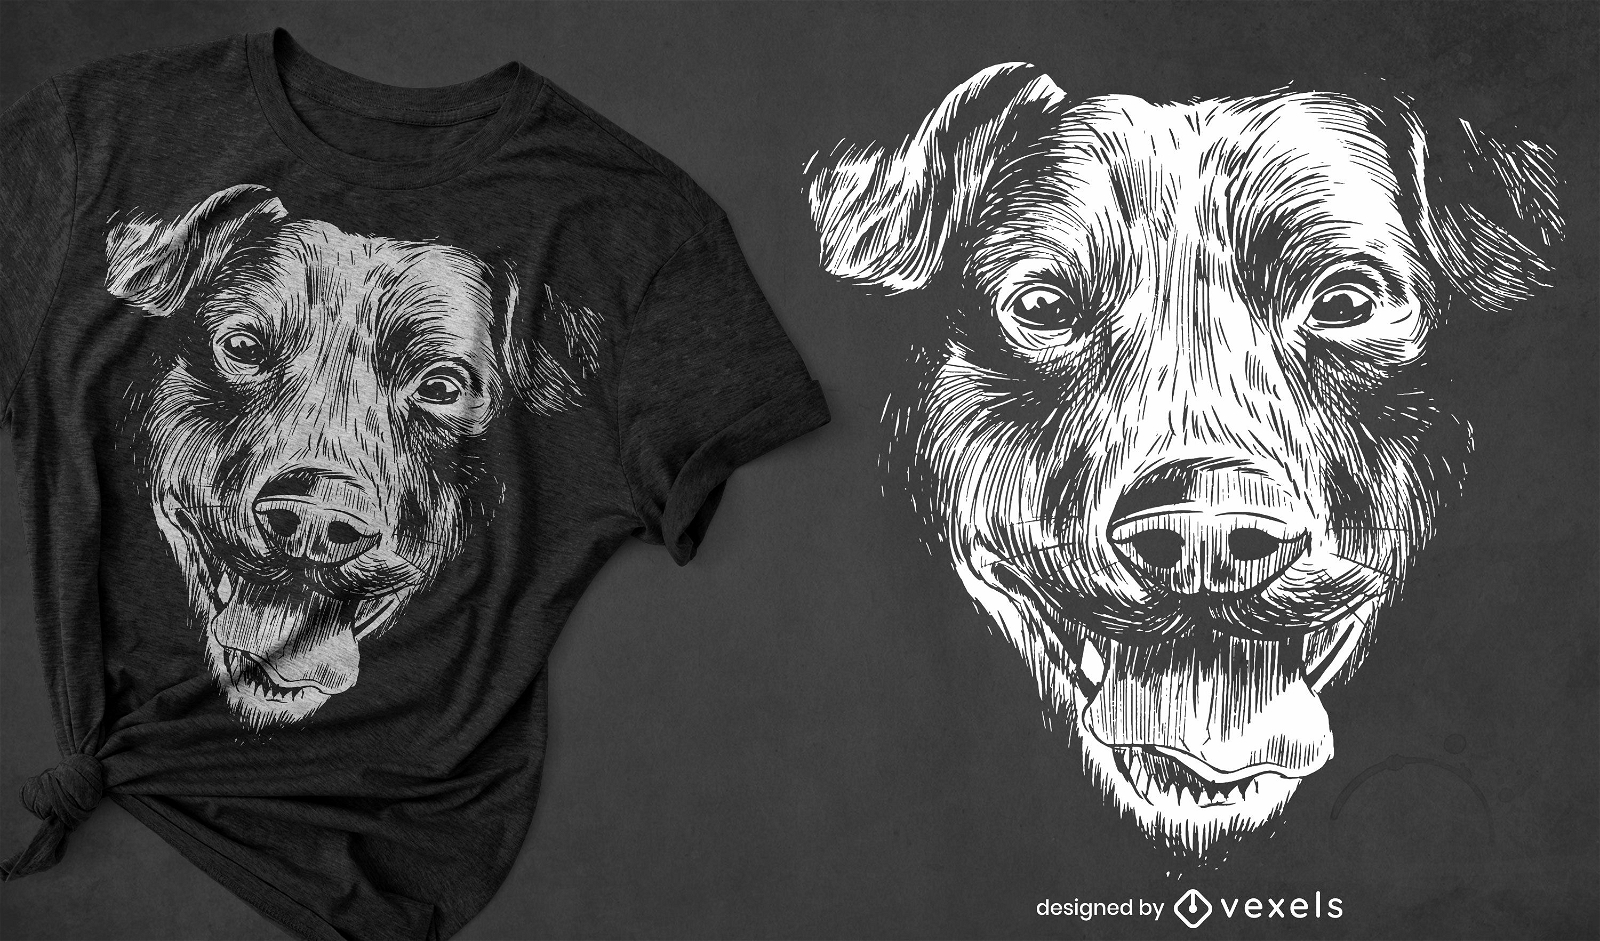 Realistic dog t-shirt design